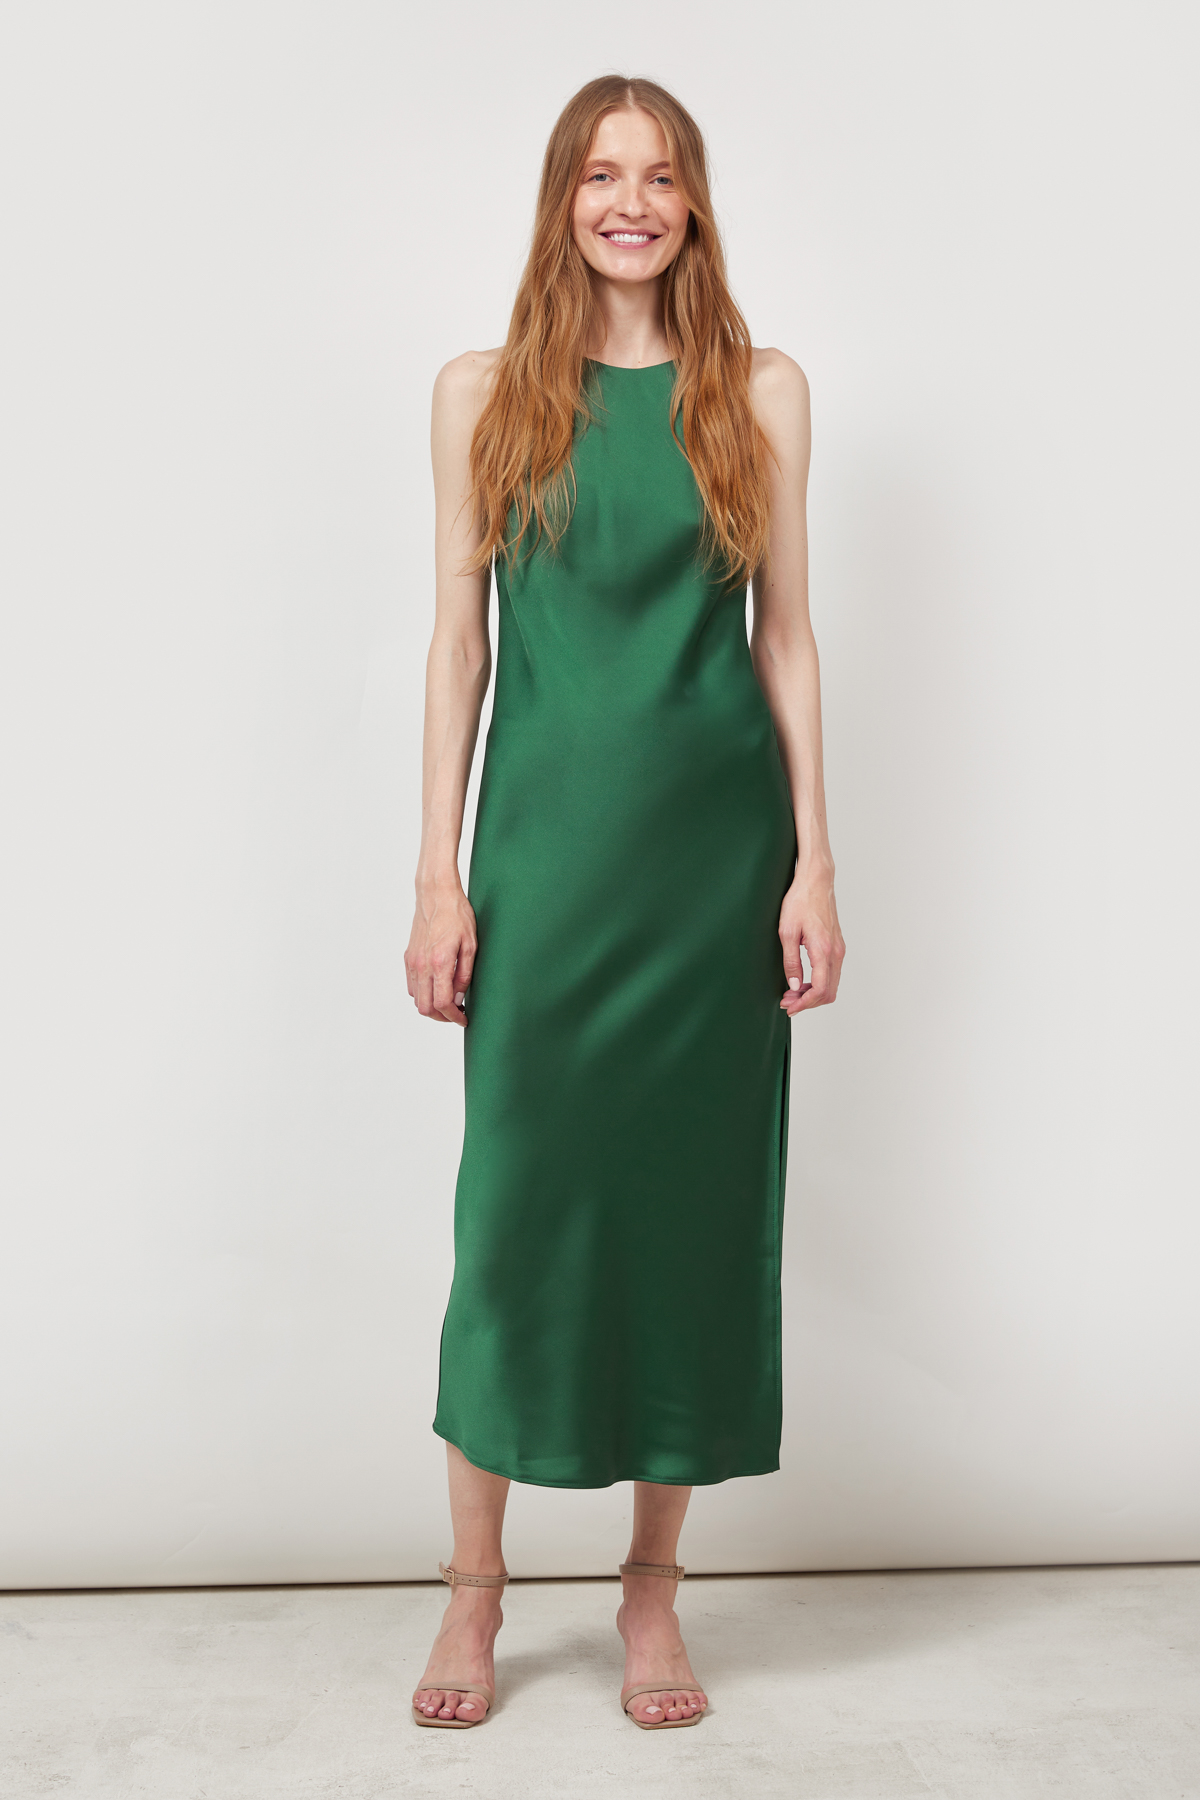 Emerald green satin slip dress, photo 3